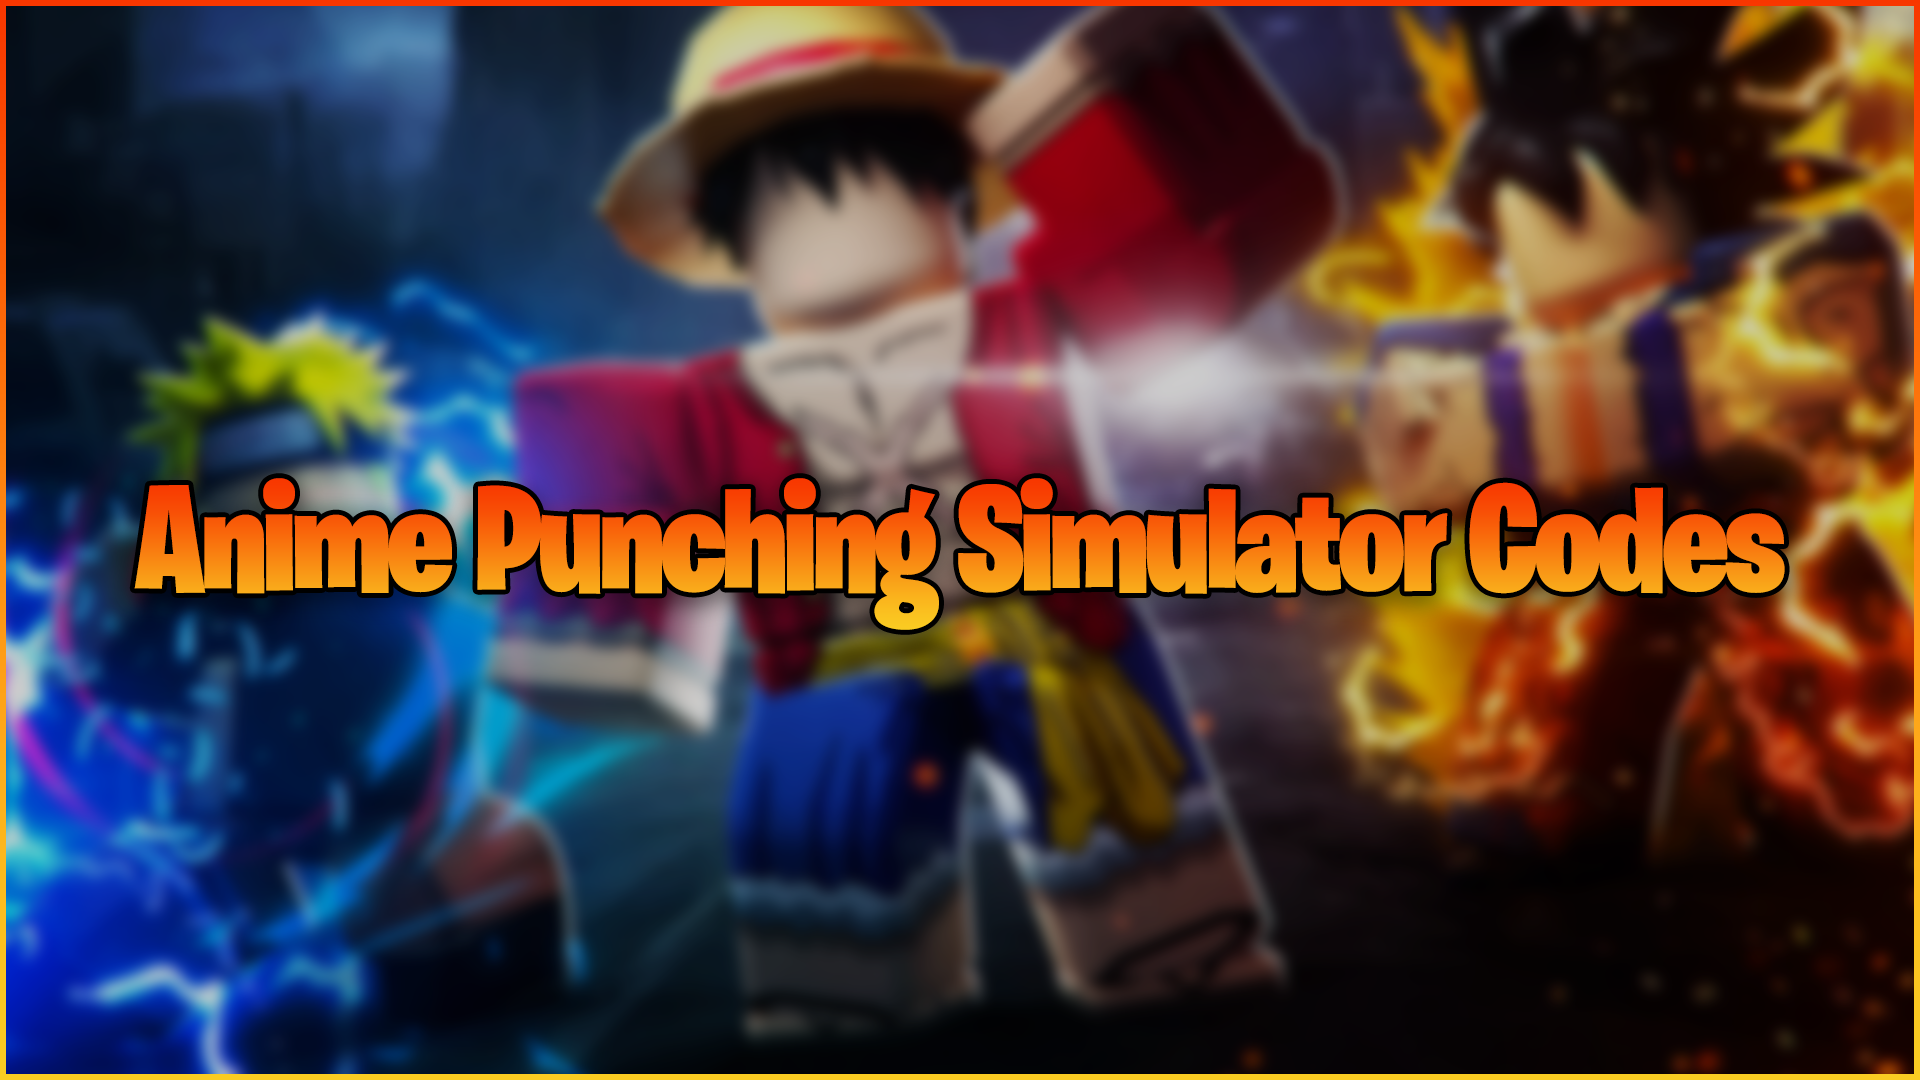 Master Punching Simulator codes